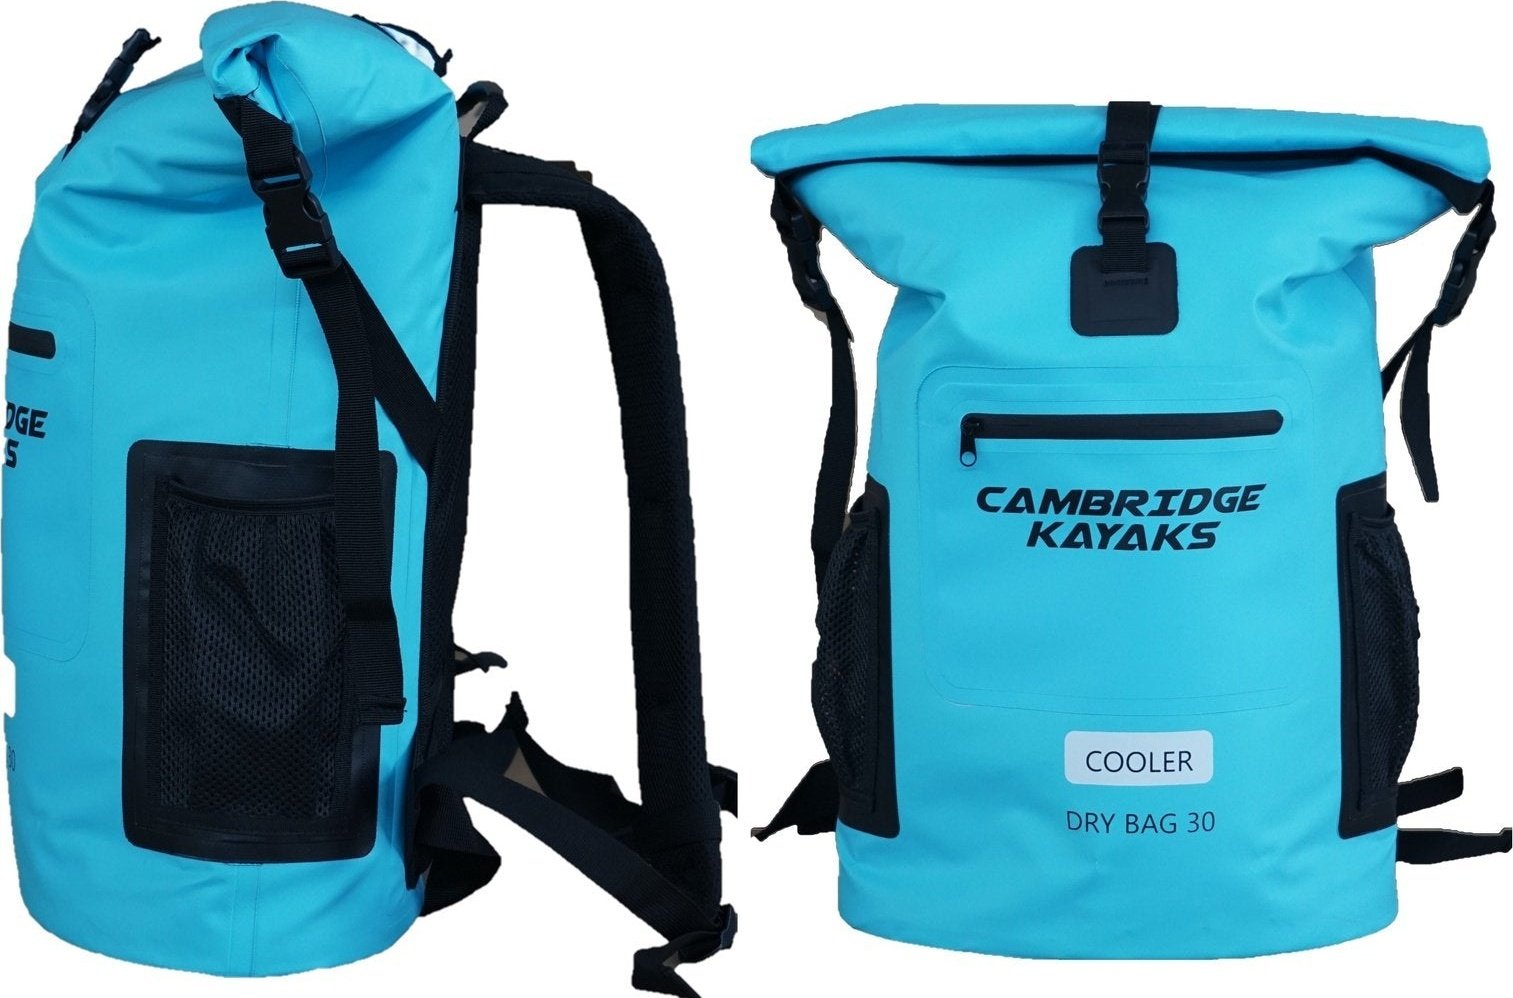 Cambridge Kayaks Cooler Dry Bag - Blue